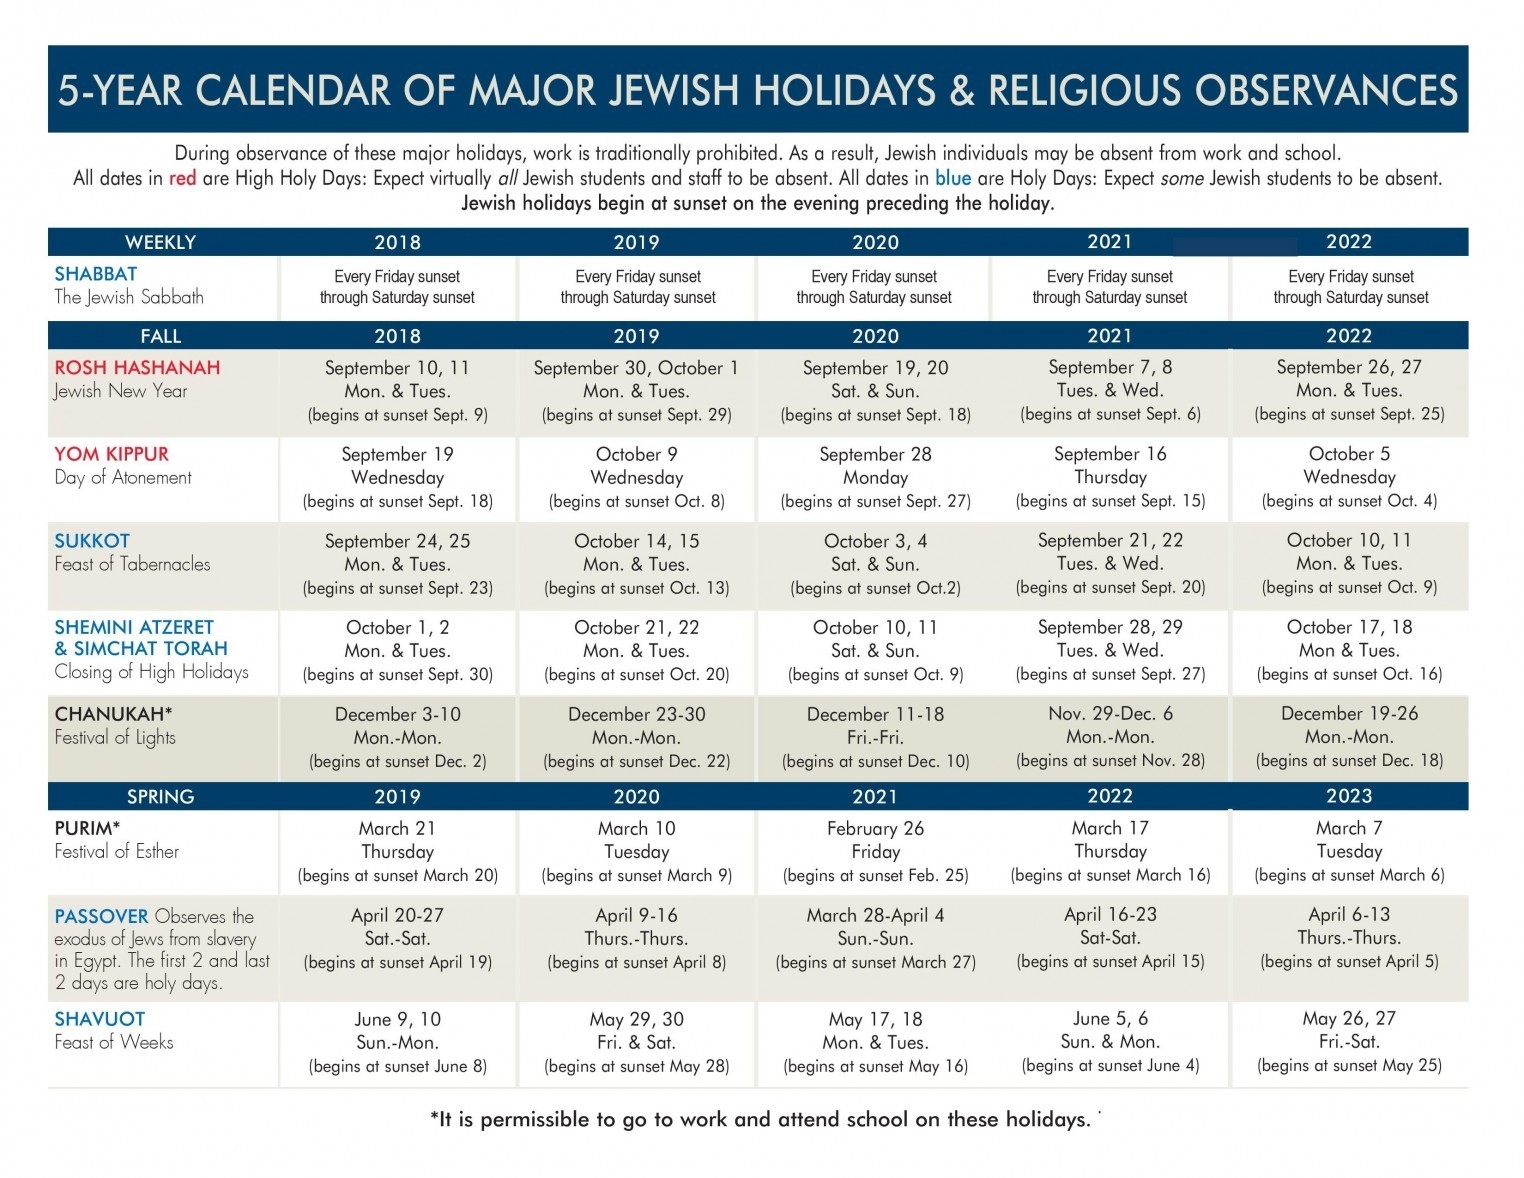 5-Year Jewish Holiday Calendar | Jewish Federation Of-October 2020 Jewish Holidays